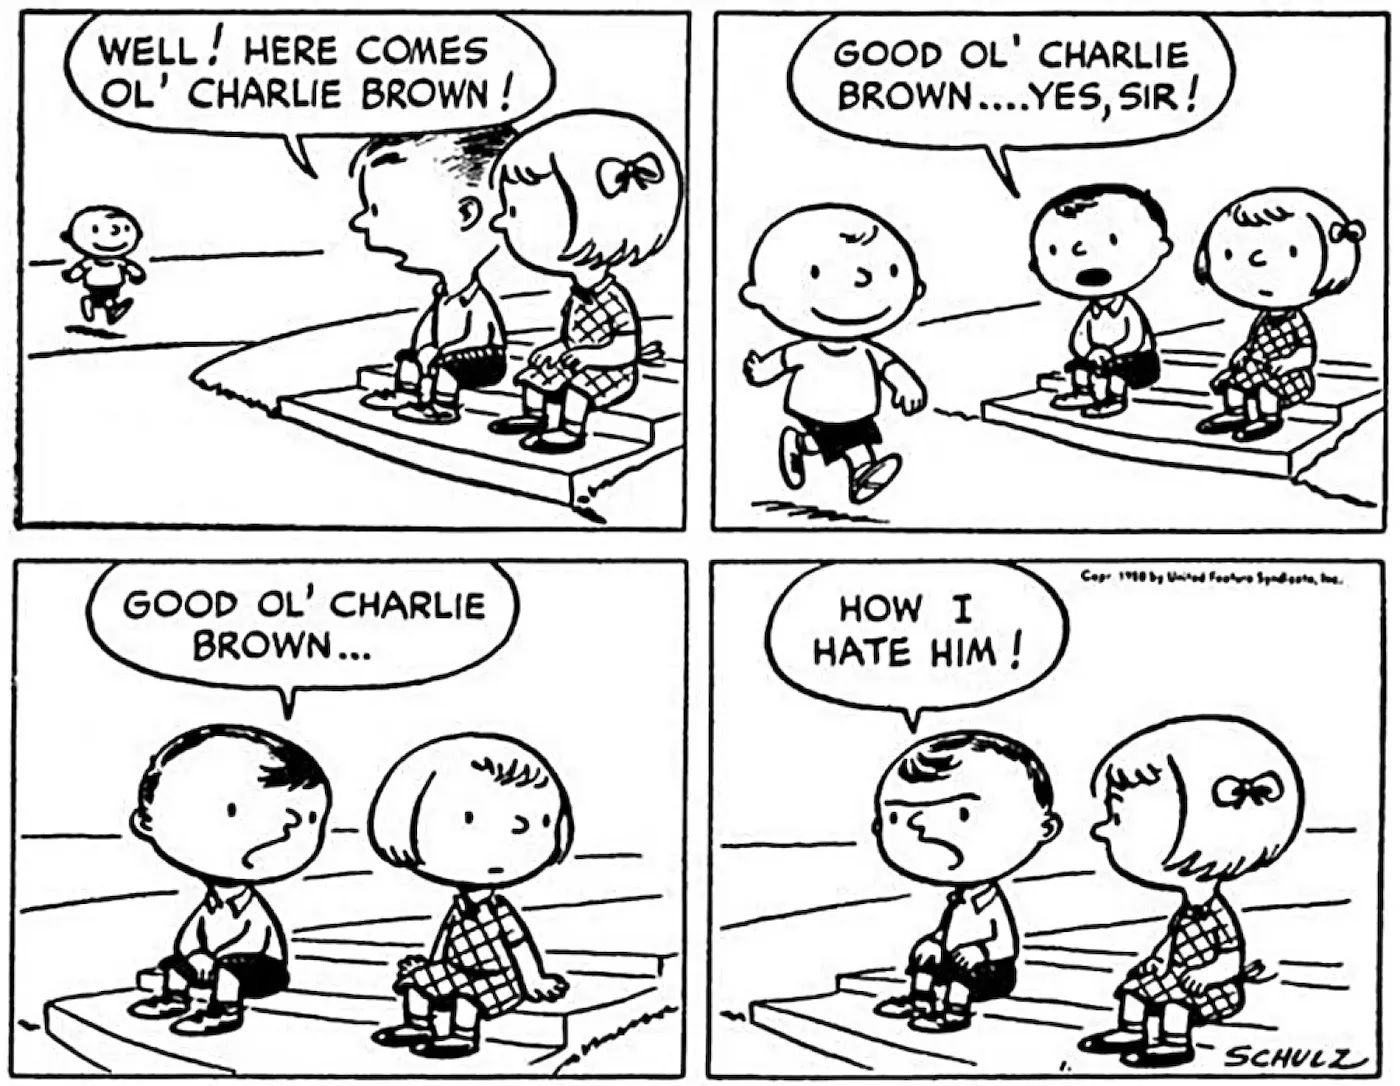 “We’re as Good as Dead!”: Dark Peanuts Parody Imagines Charlie Brown as a Twilight Zone Villain